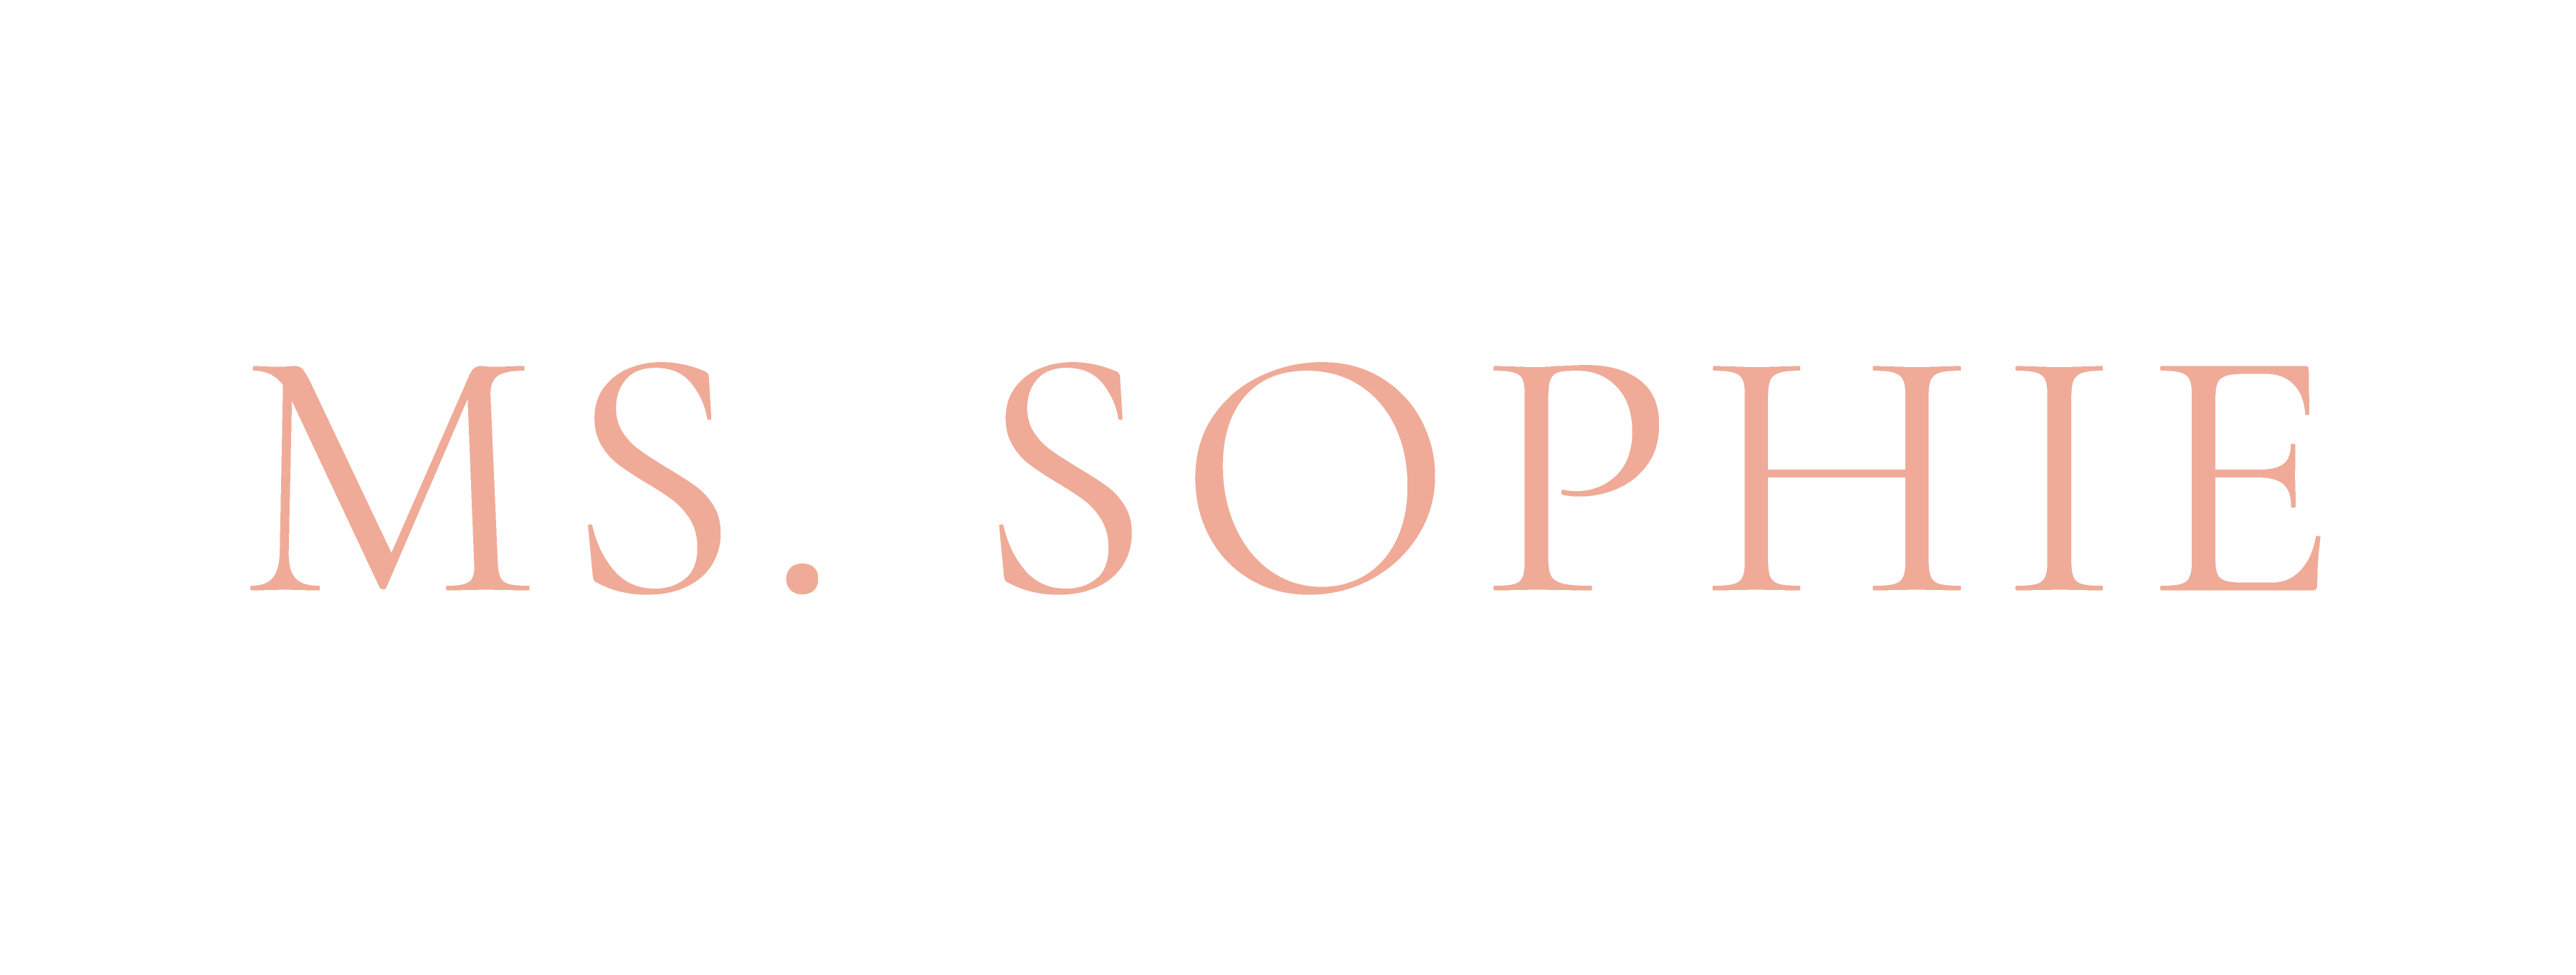 Ms. Sophie logo